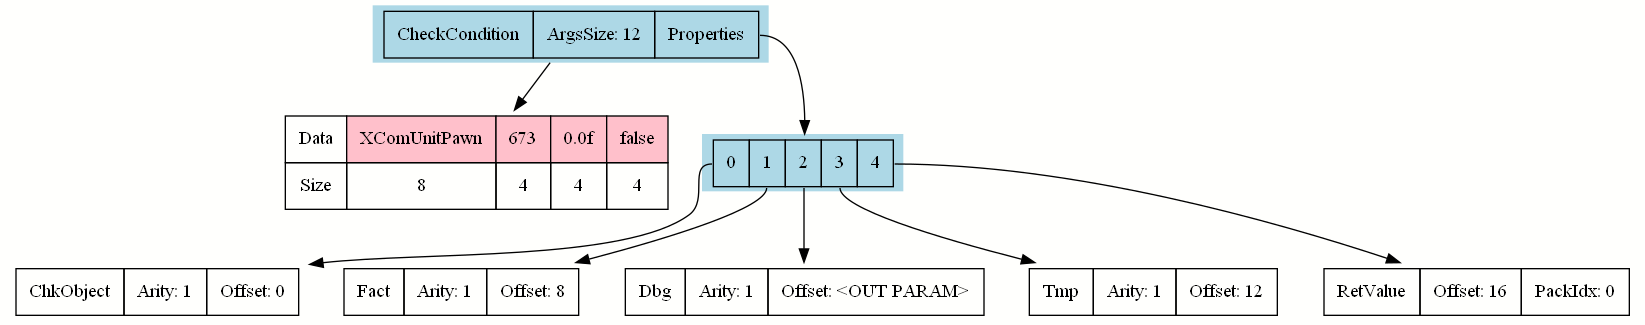 function property data visualization